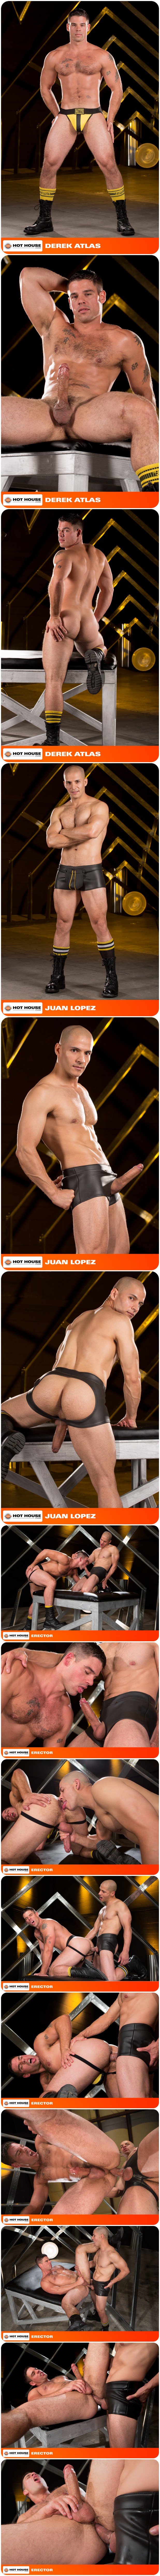 Hot House, Derek Atlas, Juan Lopez